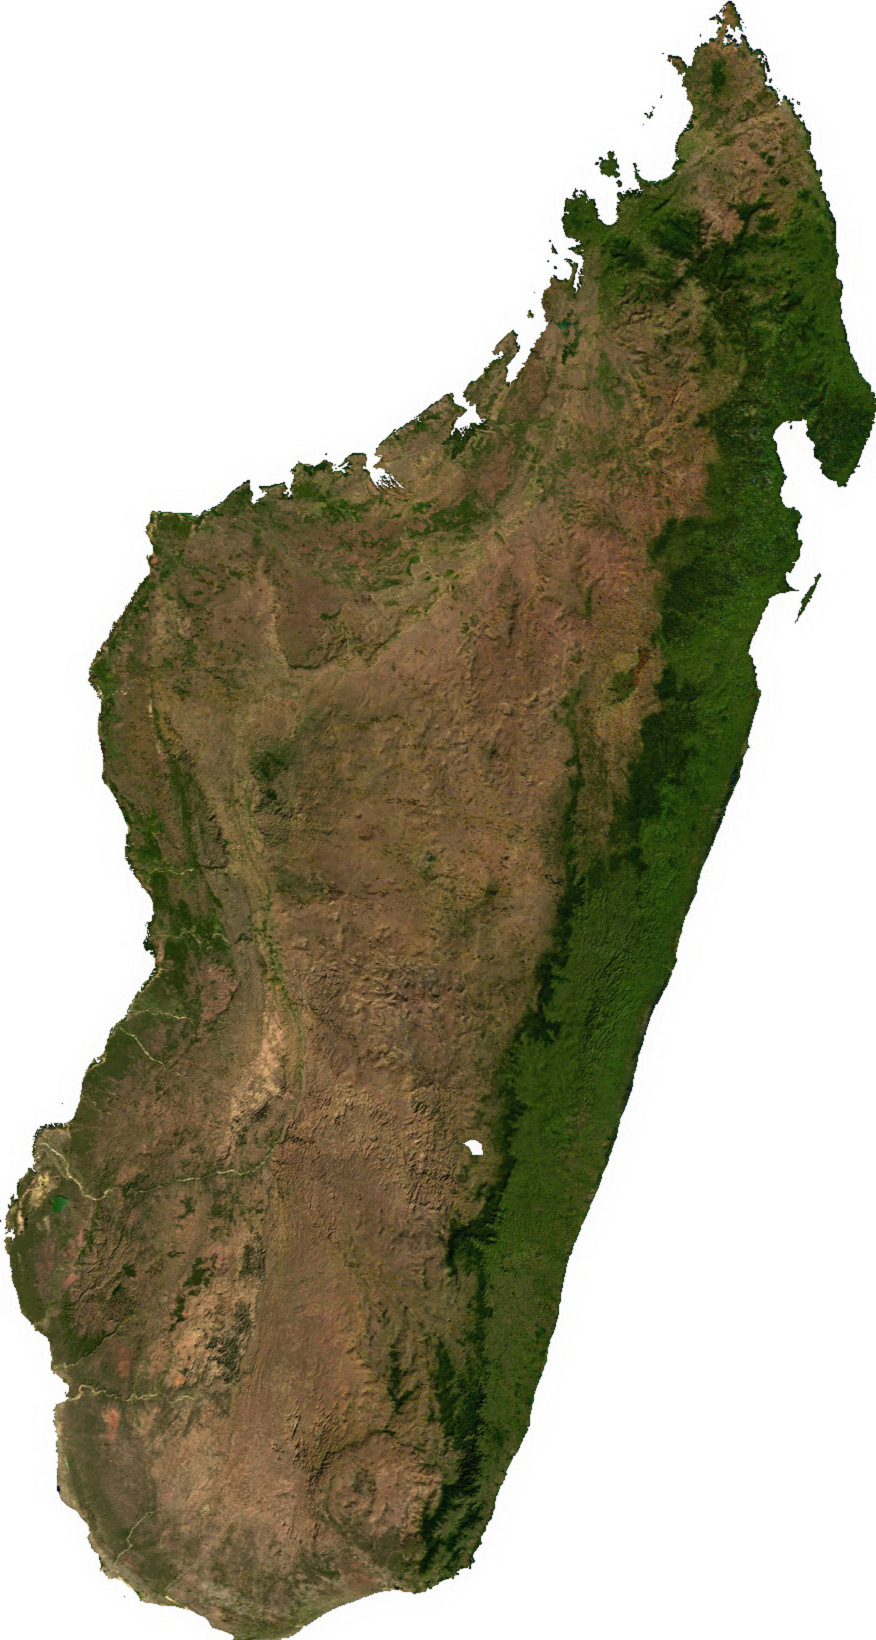 Madagascar Sattelite
                image